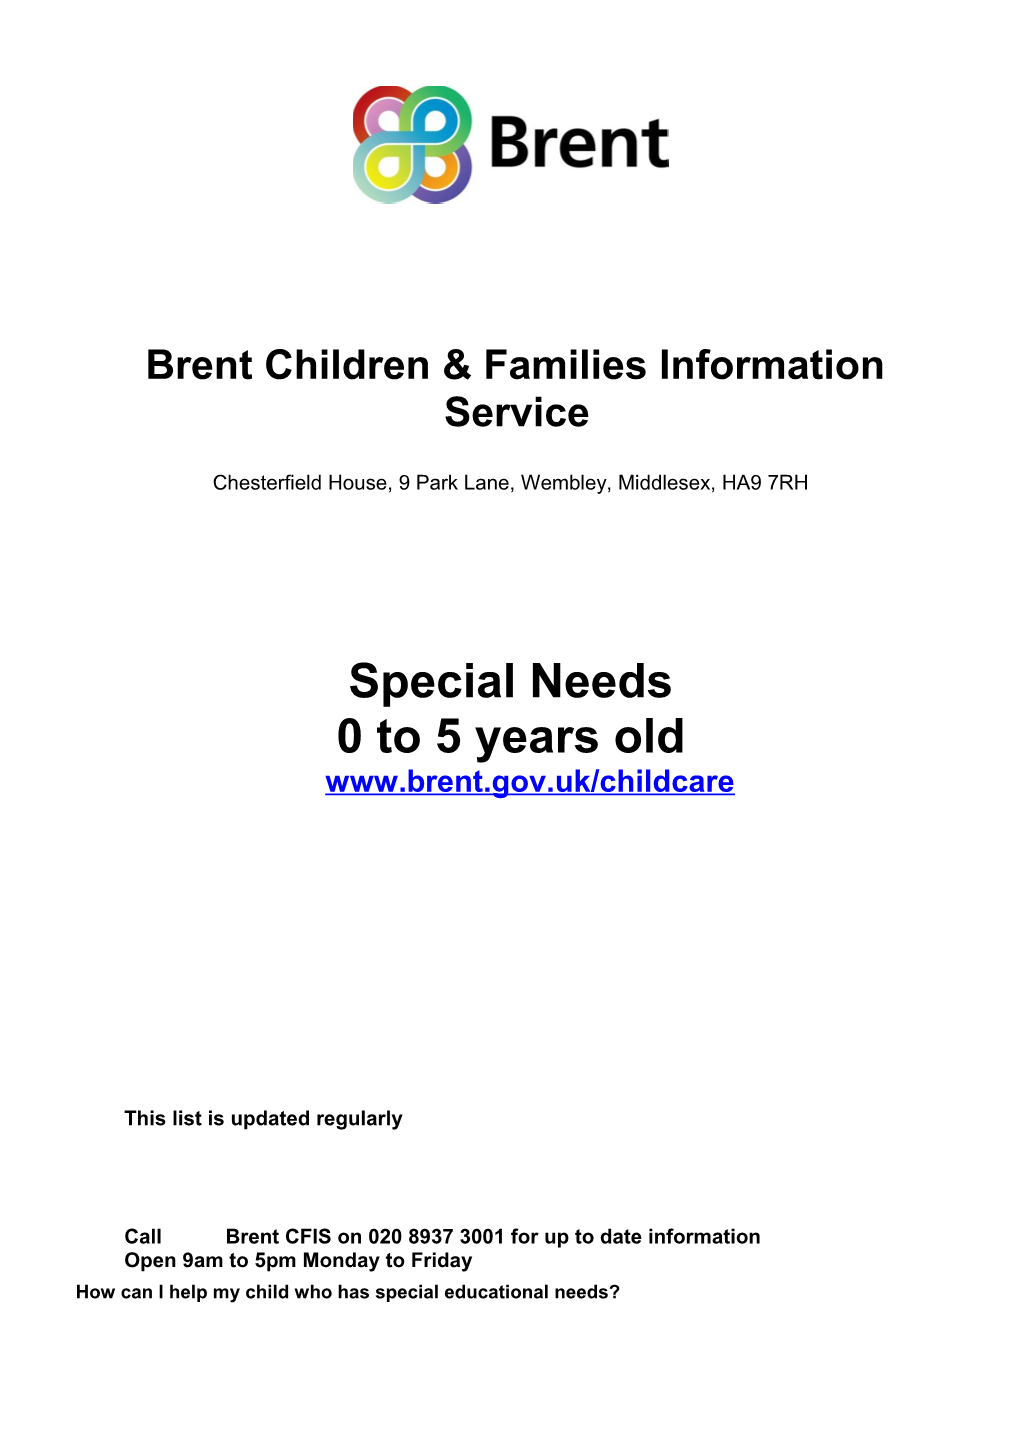 Brent Children & Families Information Service